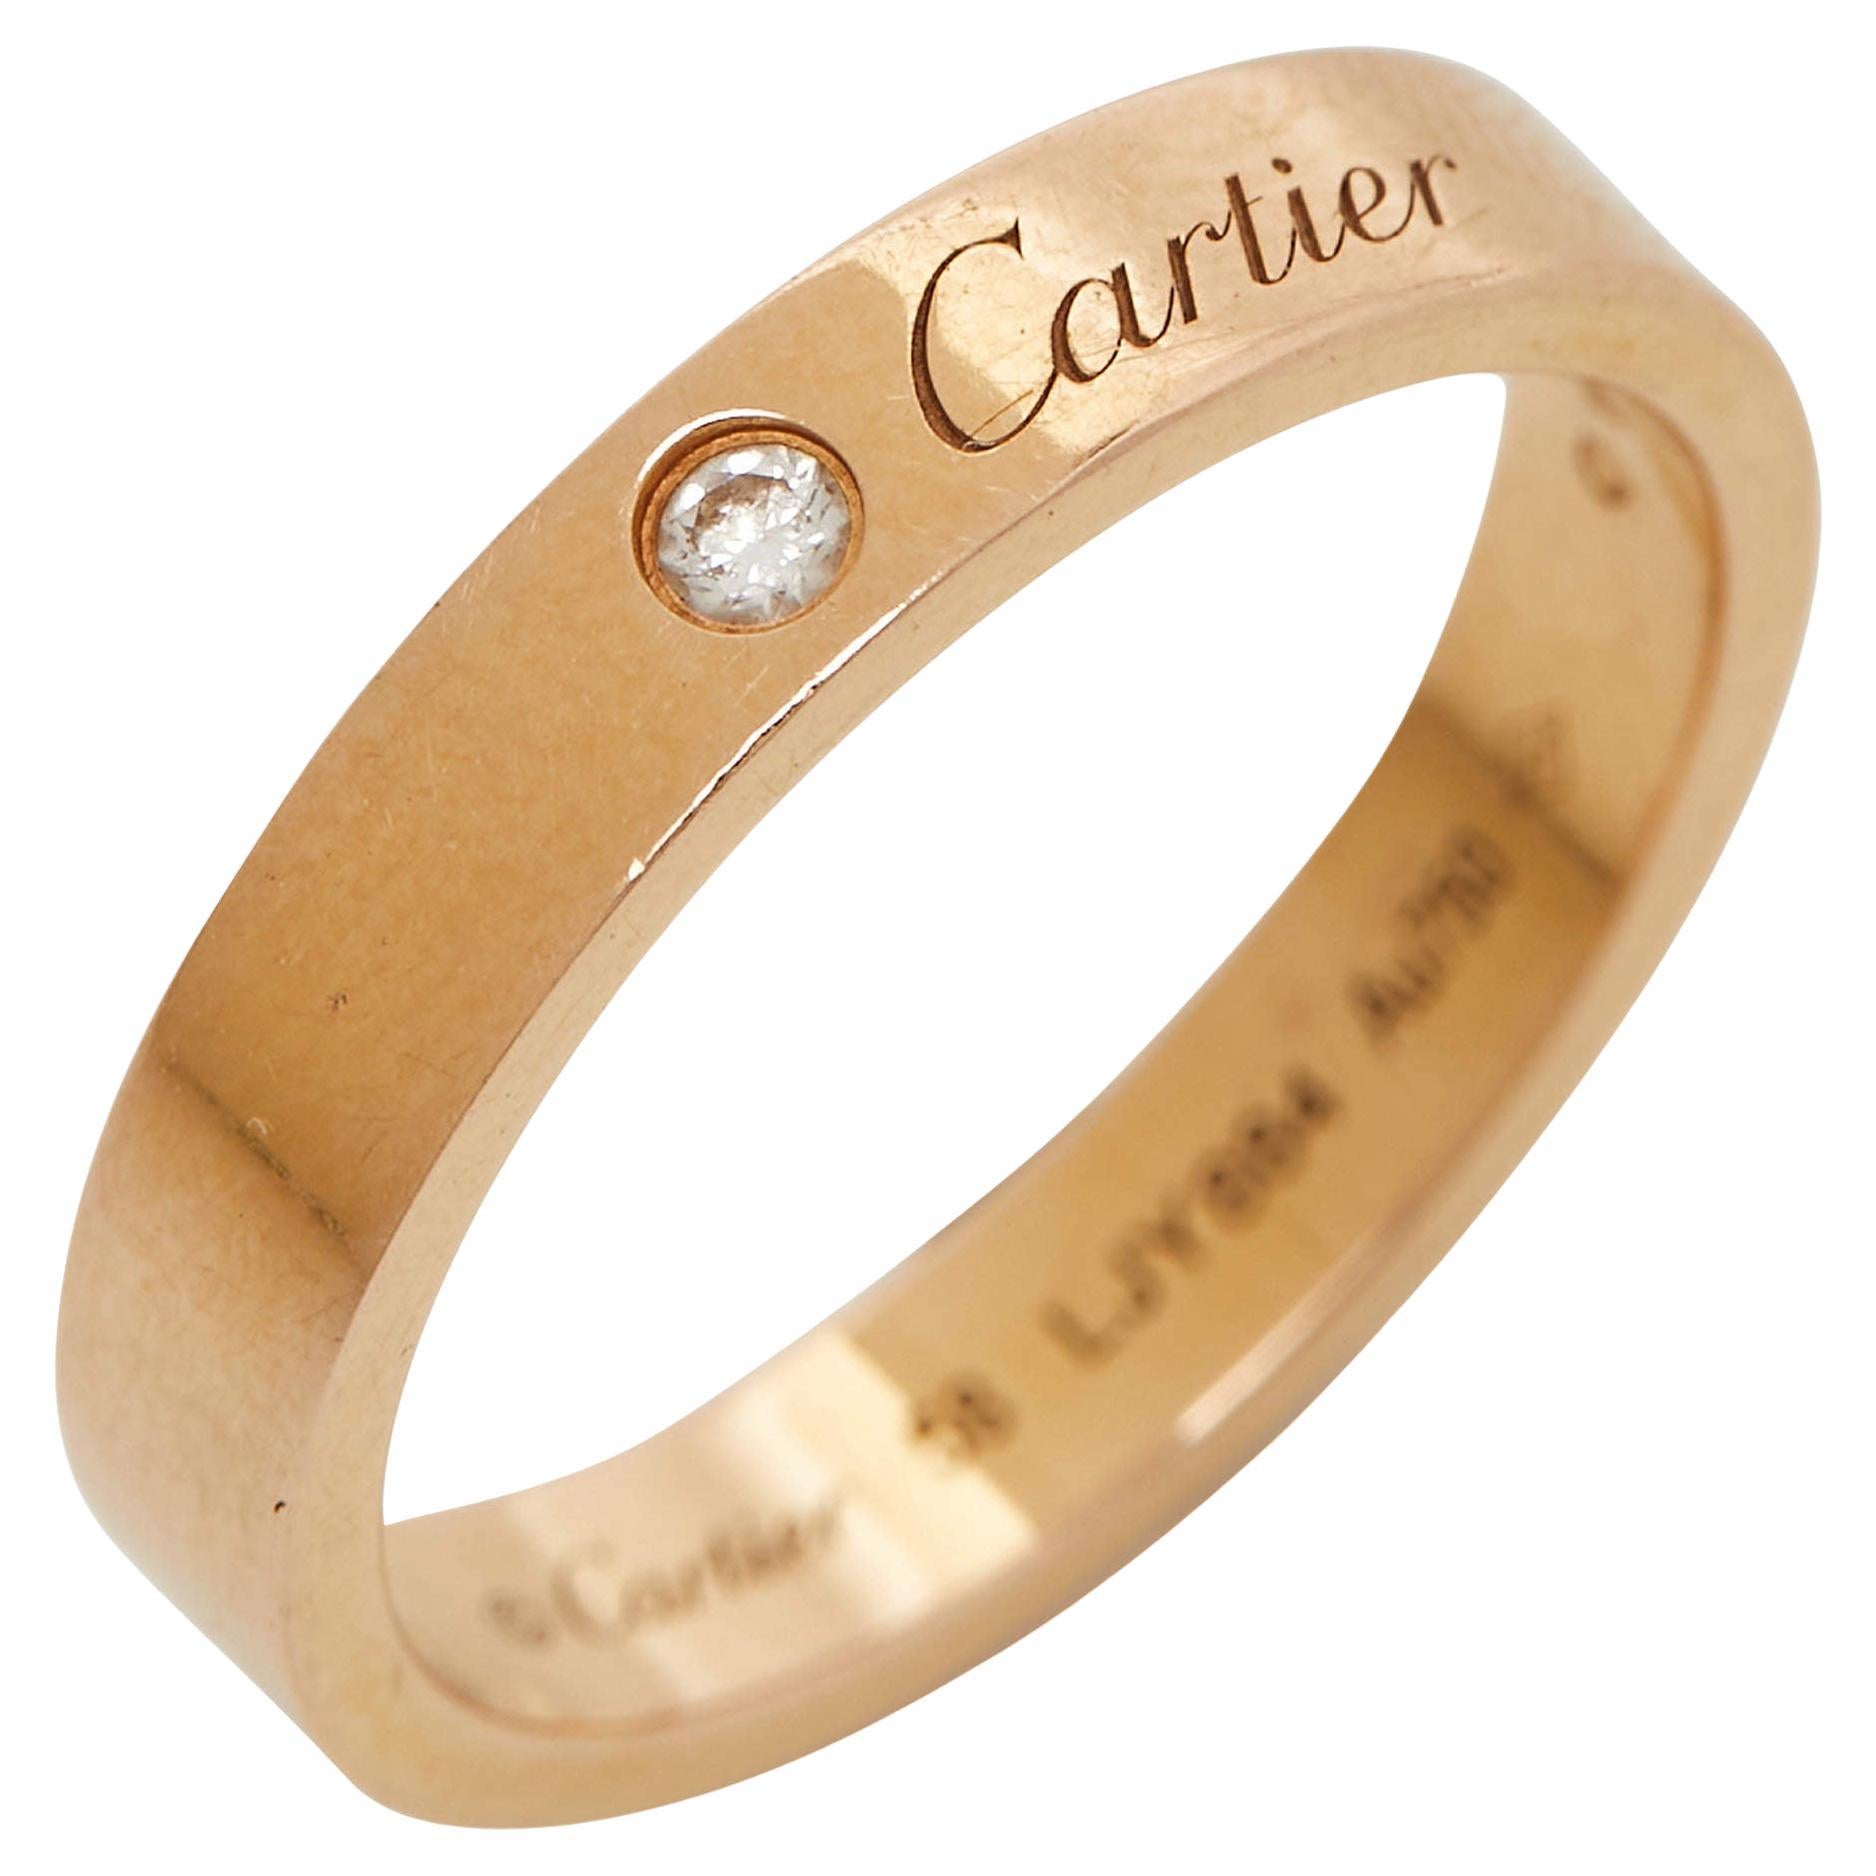 Cartier C De Cartier Diamond 18k Rose Gold Wedding Band Ring Size 58